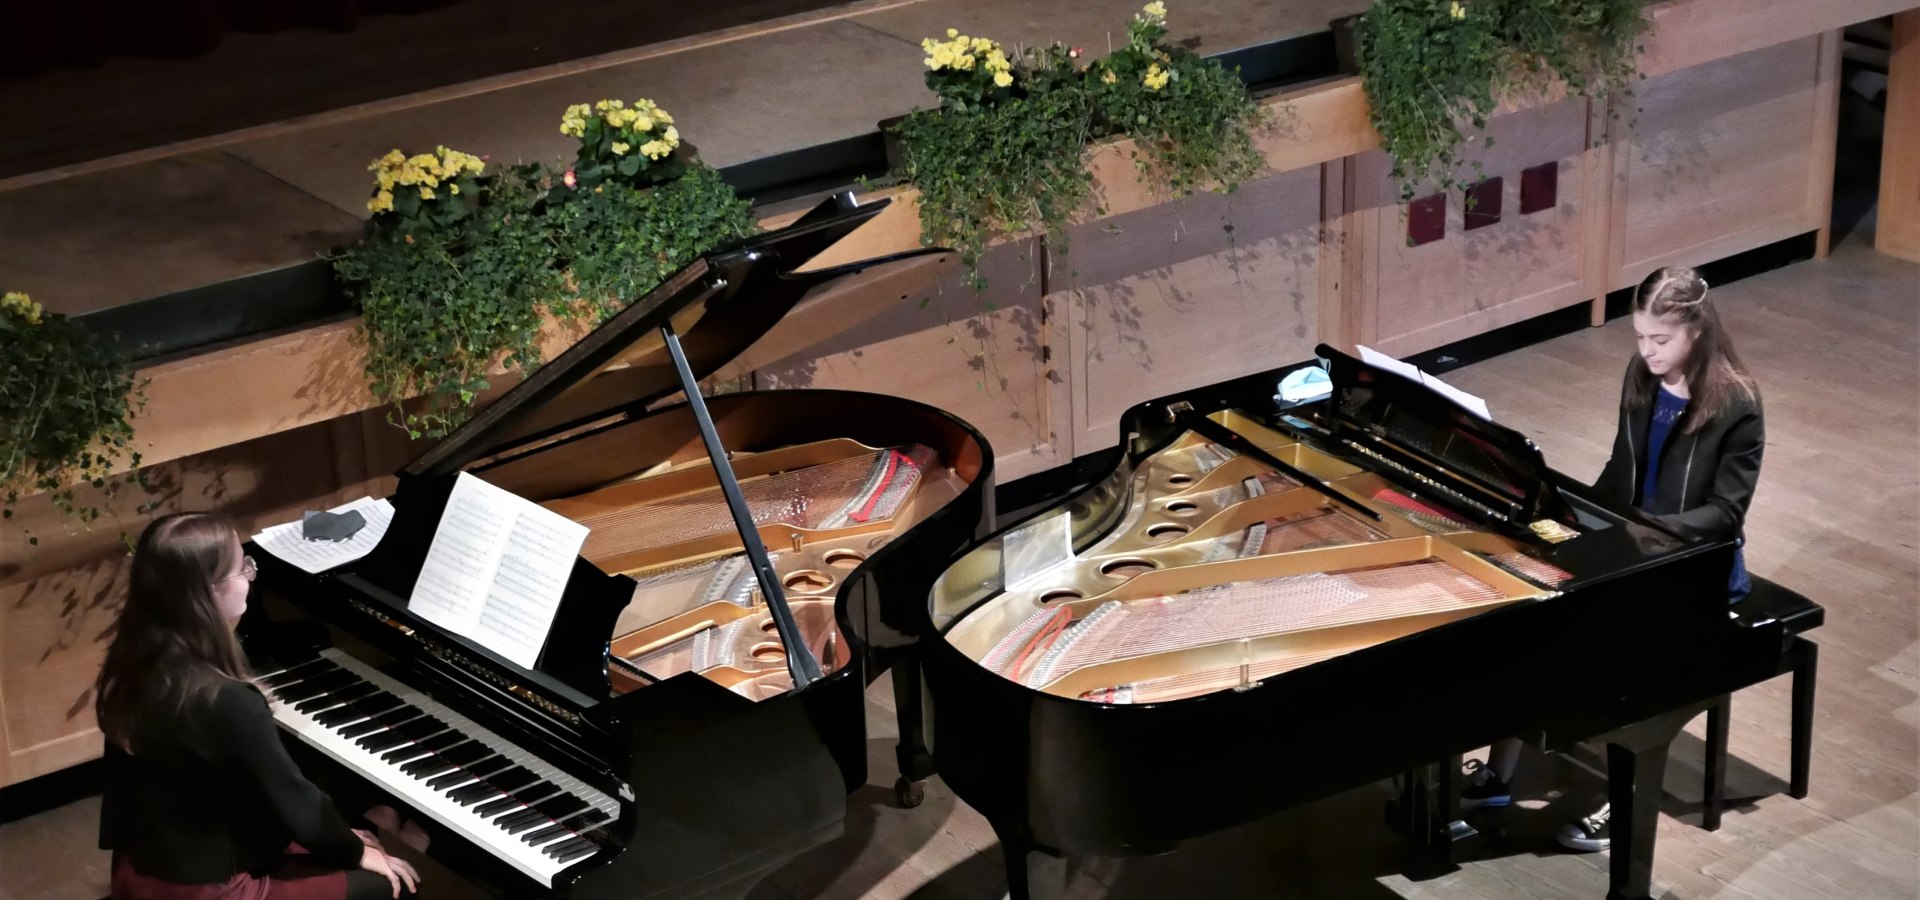 Klaviermatinee im Hefter-Kultur Saal, © Valentin Diem 